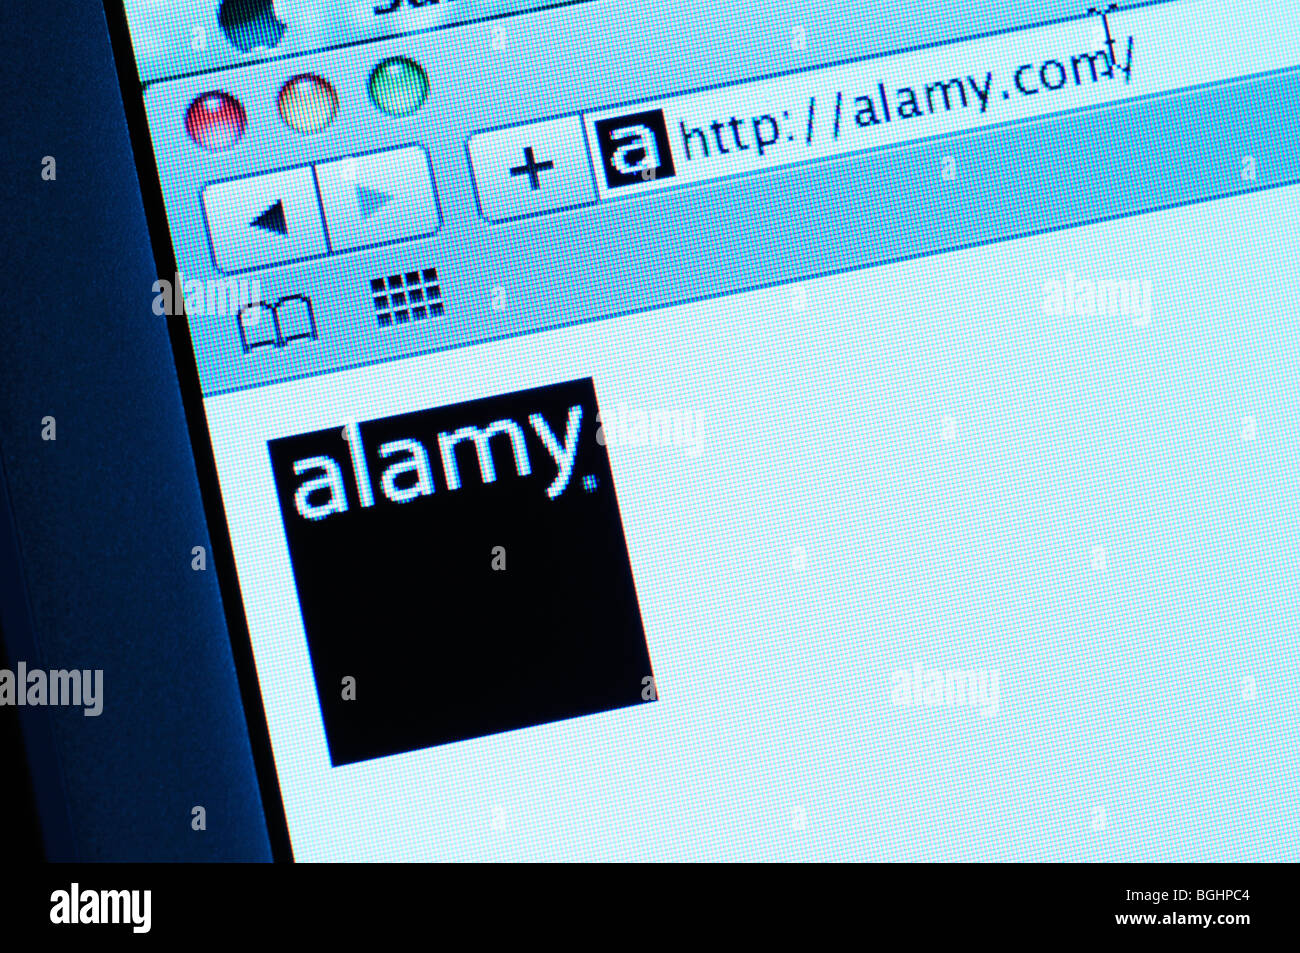 Alamy image agency website Stock Photo